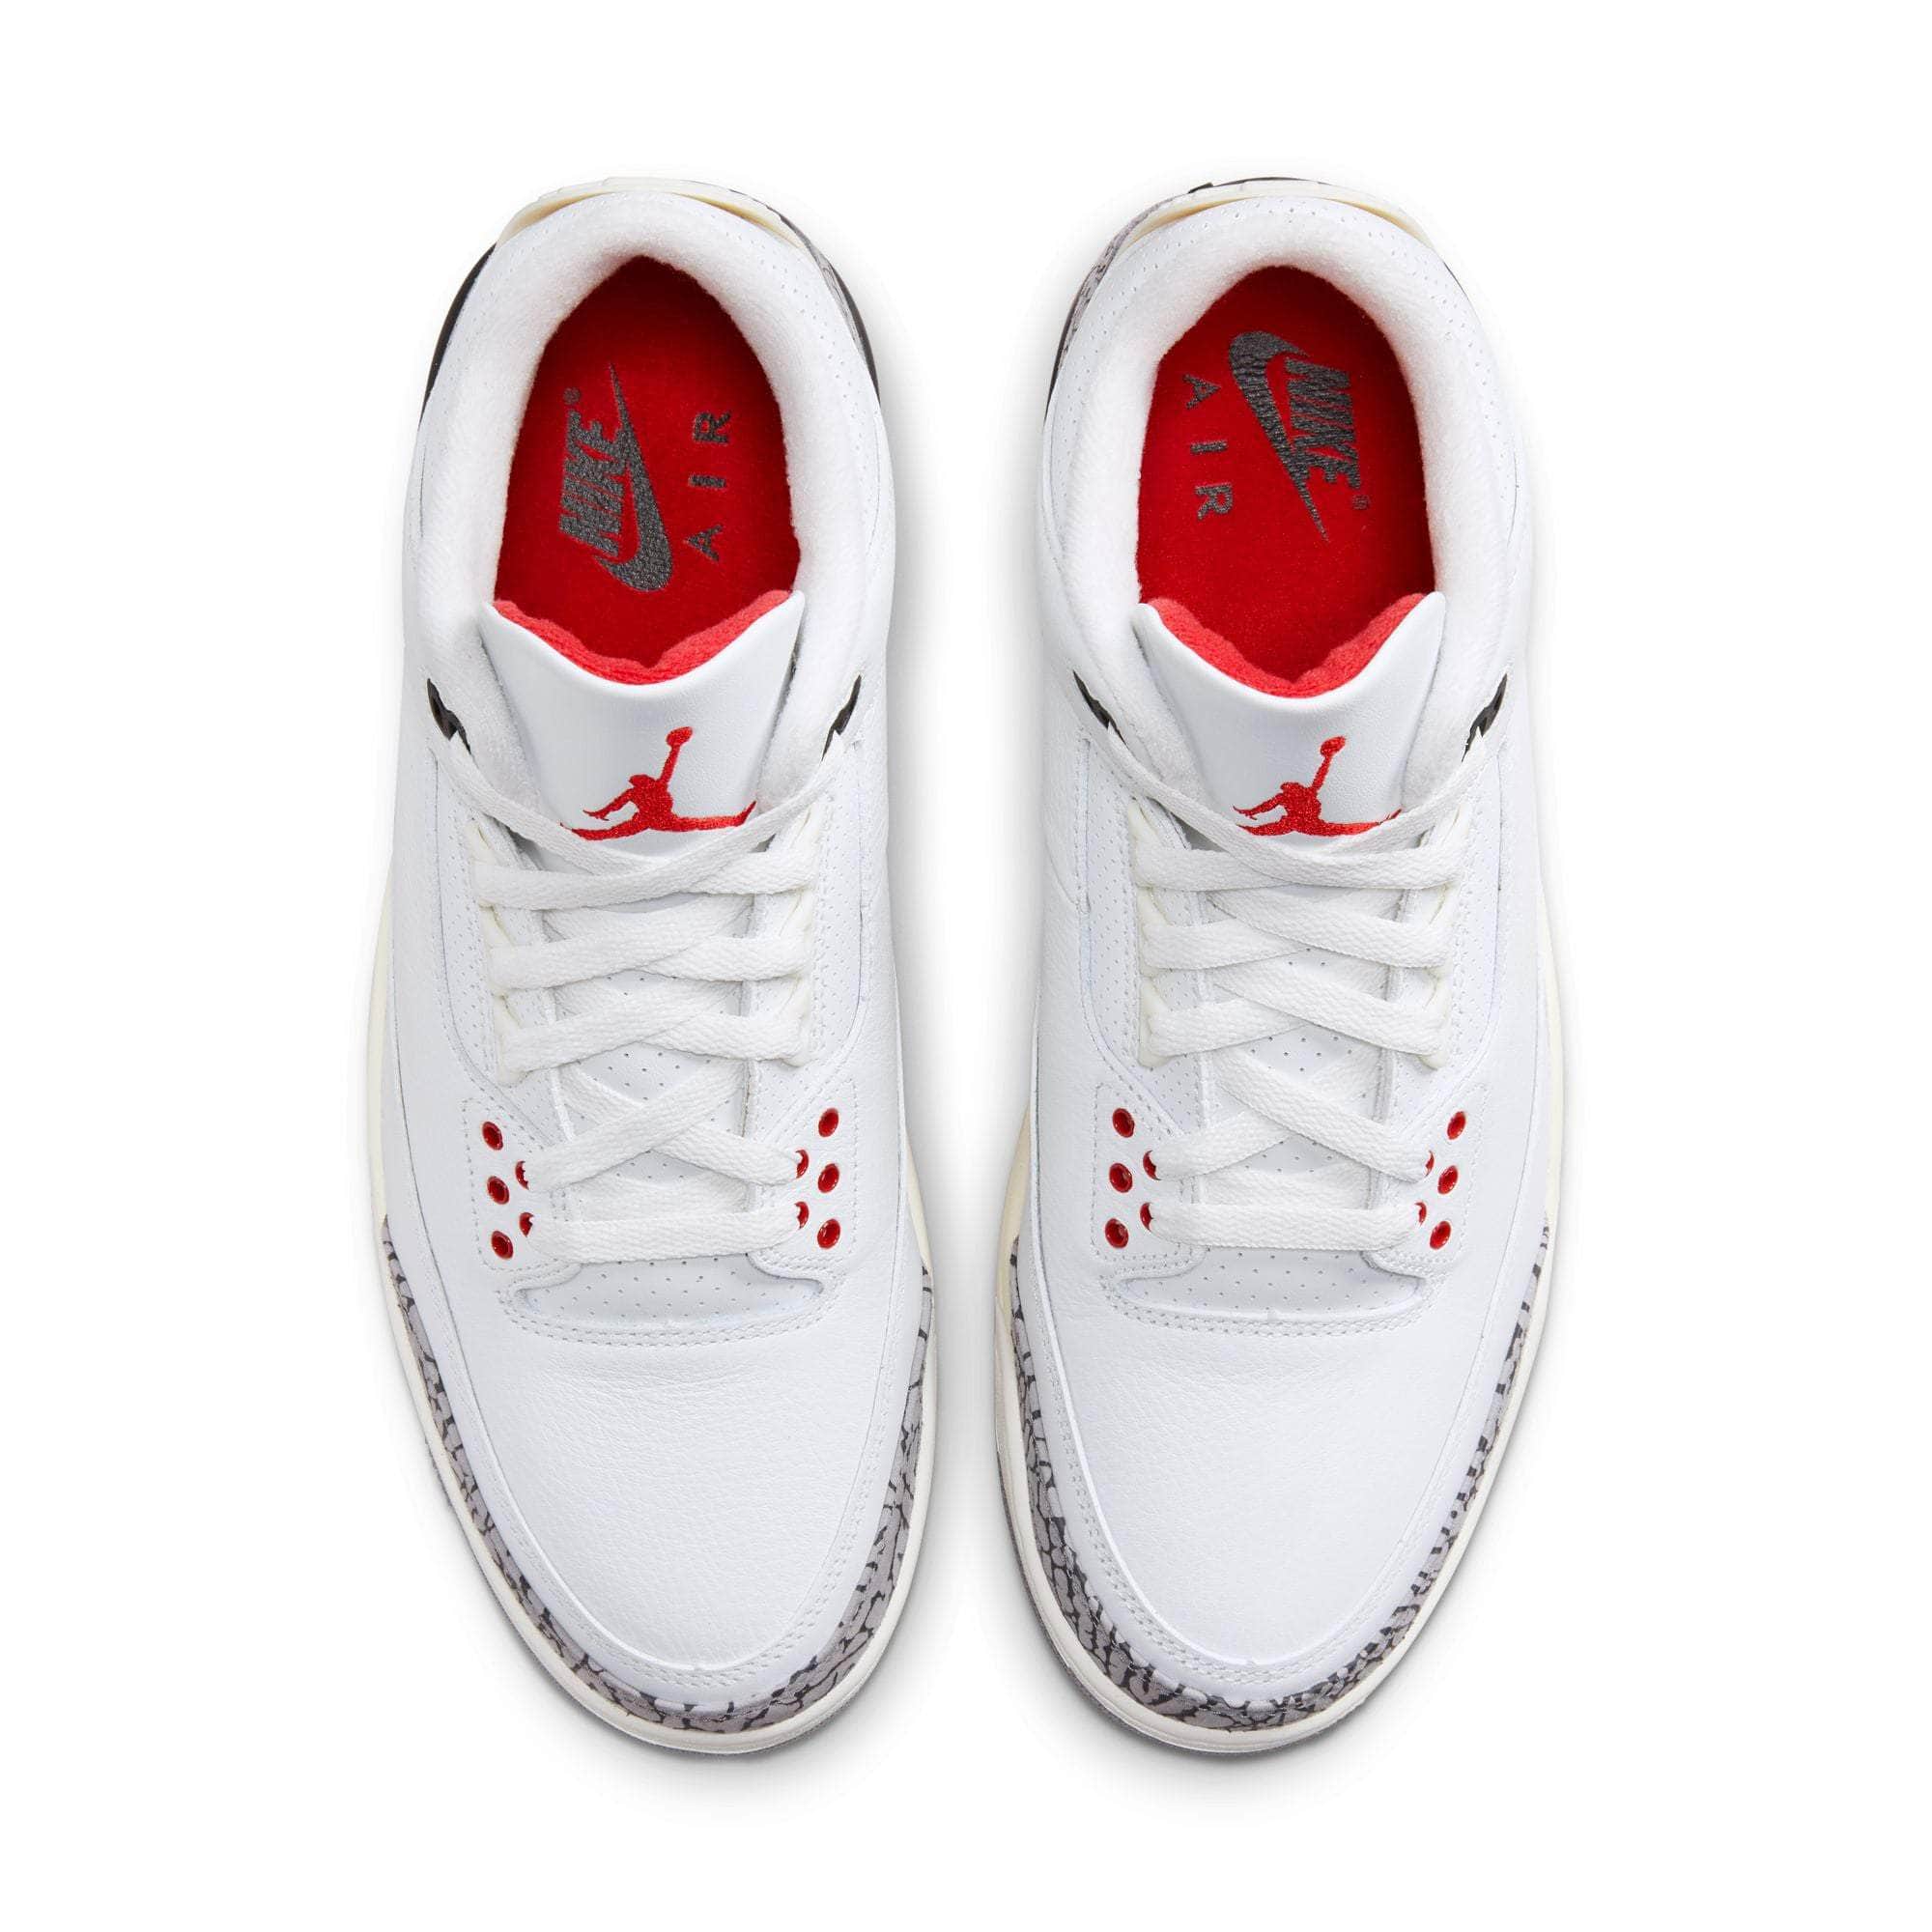 Air Jordan 3 Retro "White Cement Reimagined"   Men's   GBNY